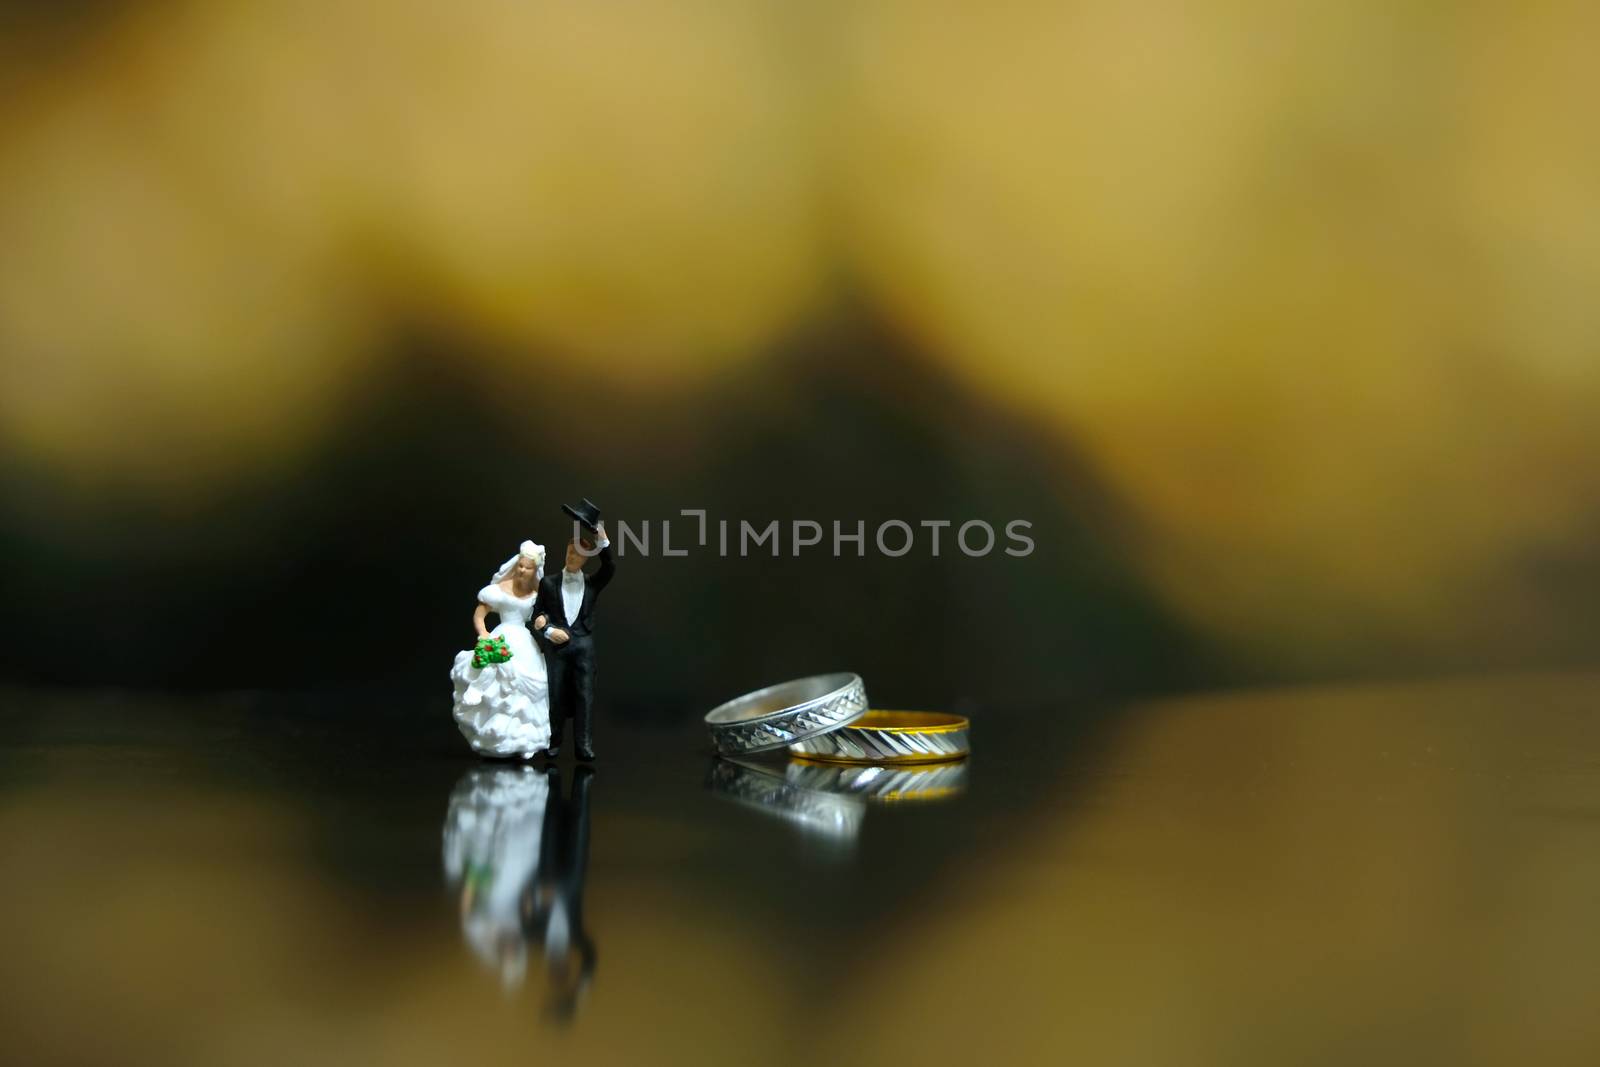 Miniature wedding concept - bride and groom walking on shiny floor beside their golden wedding ring